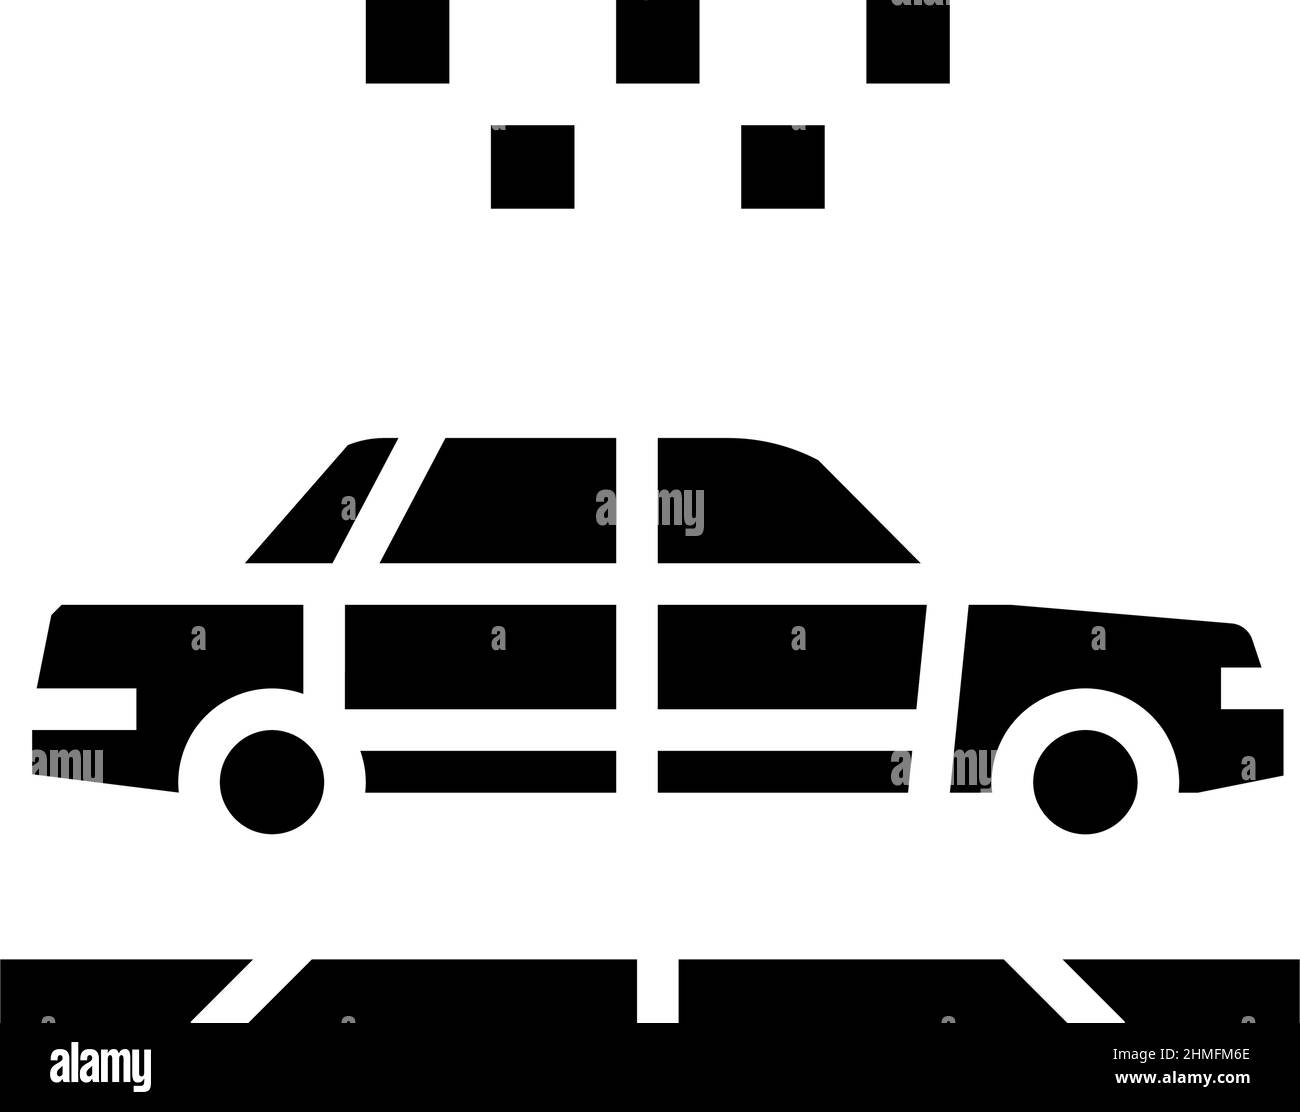 taxi cab glyph icon vector illustration Stock Vector